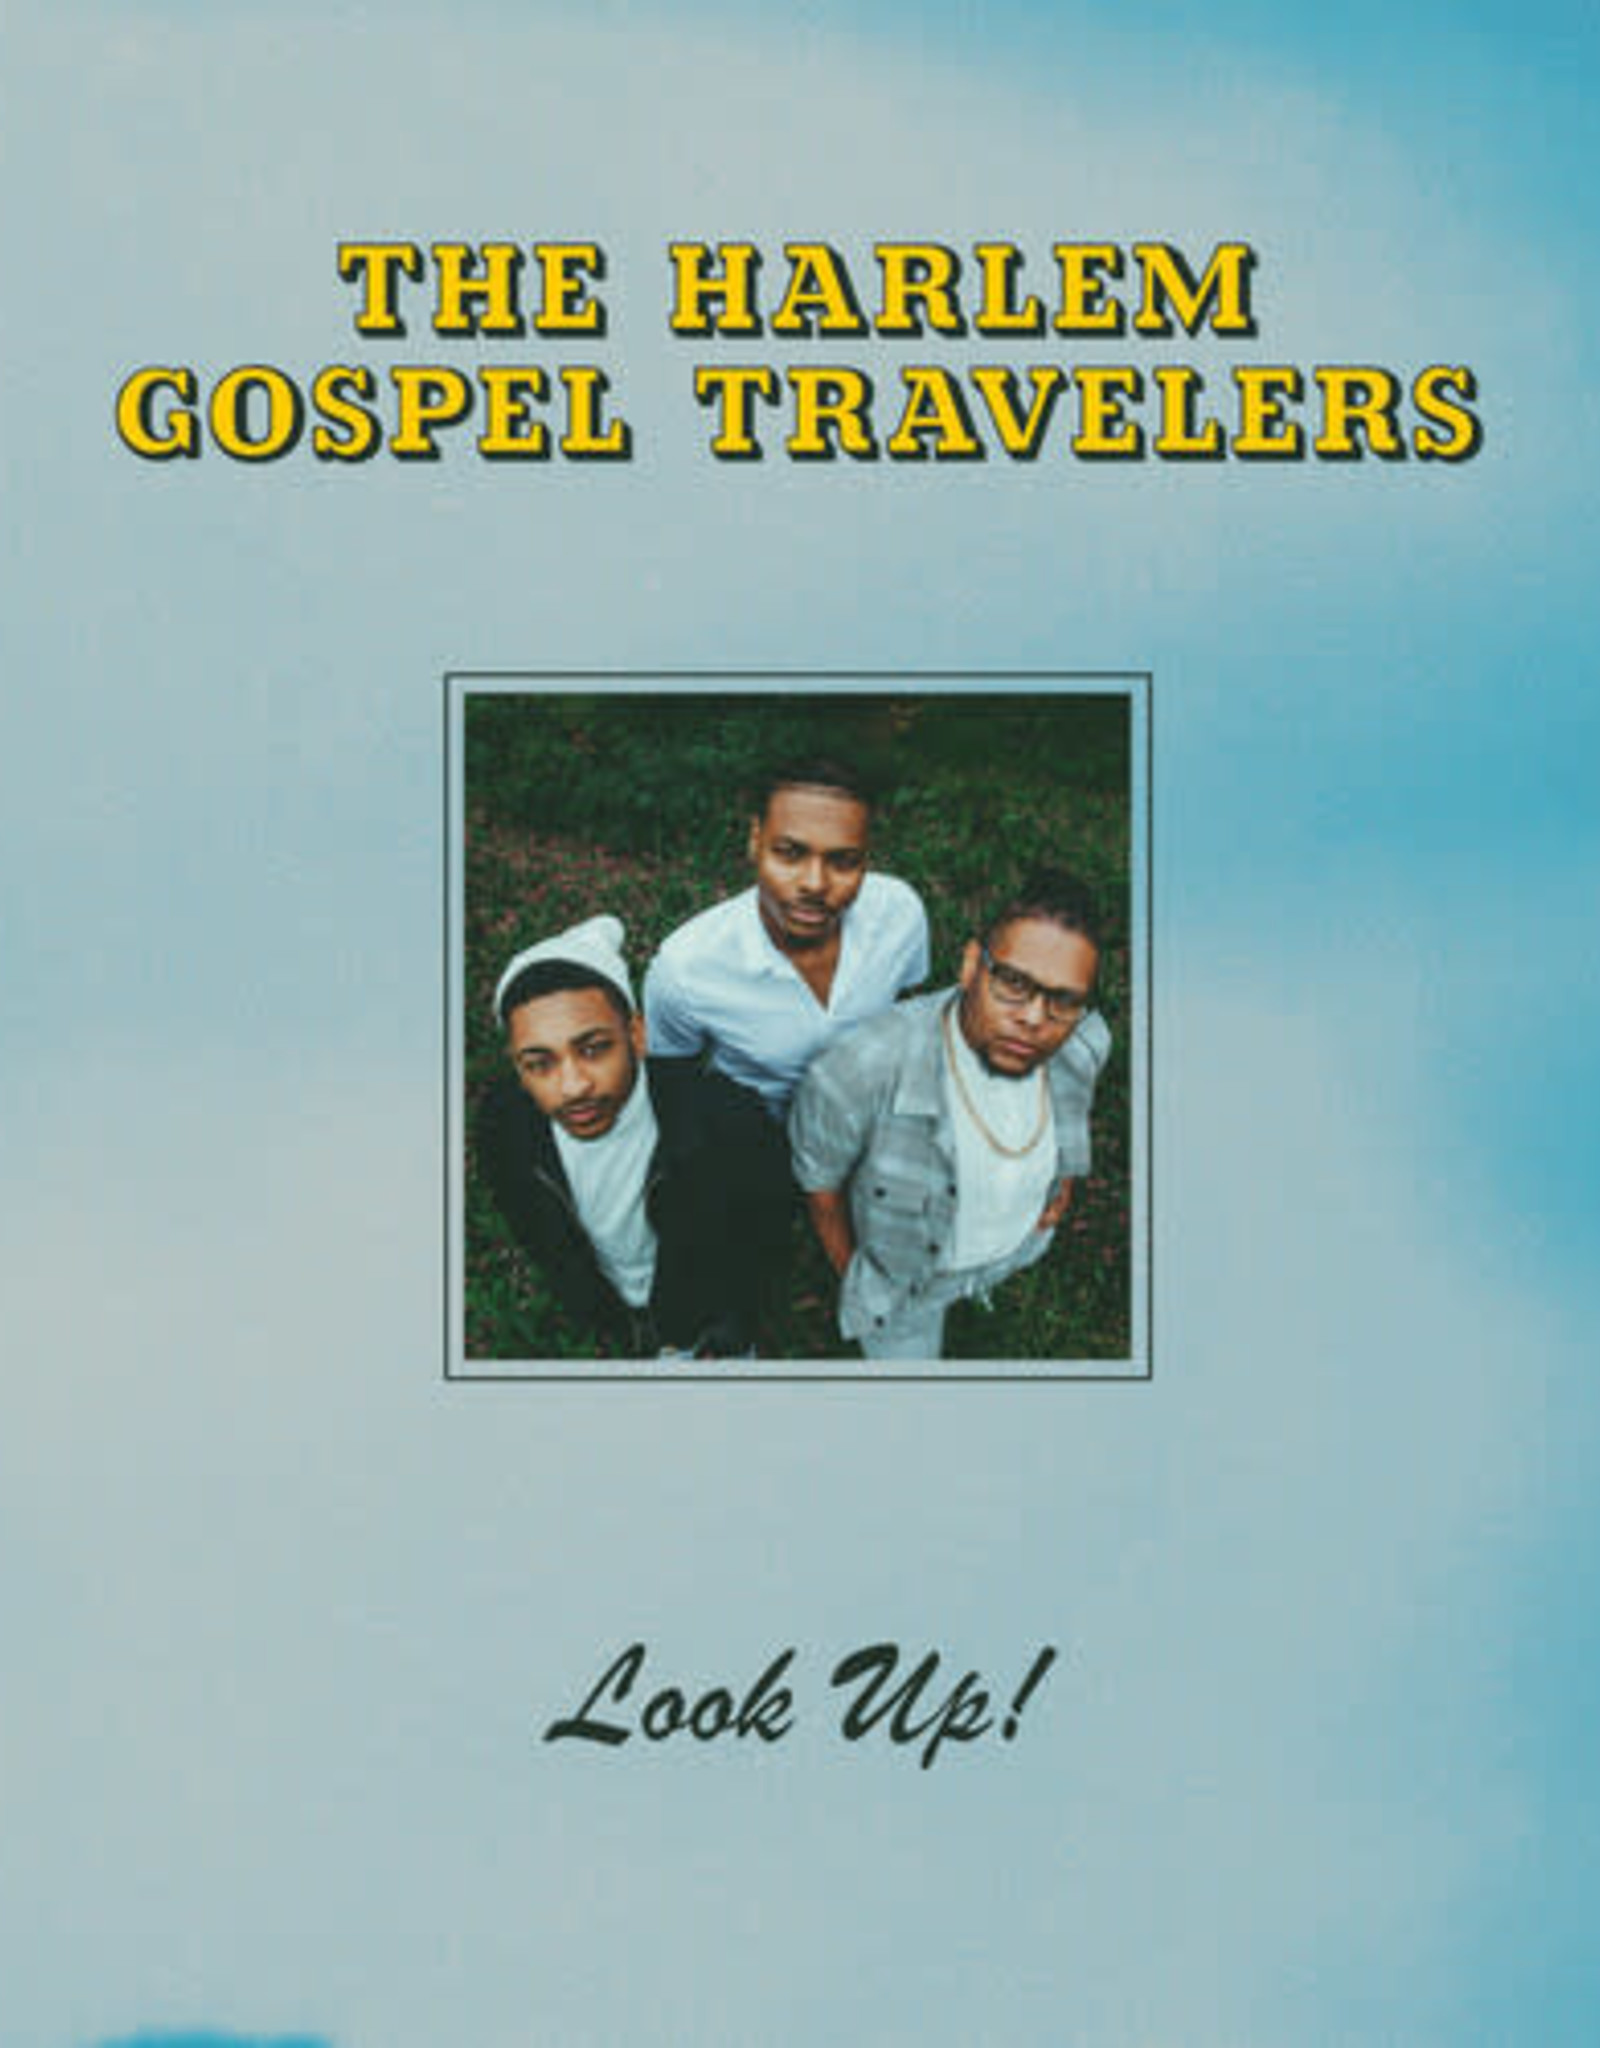 The Harlem Gospel Travelers 'Look Up!' LP